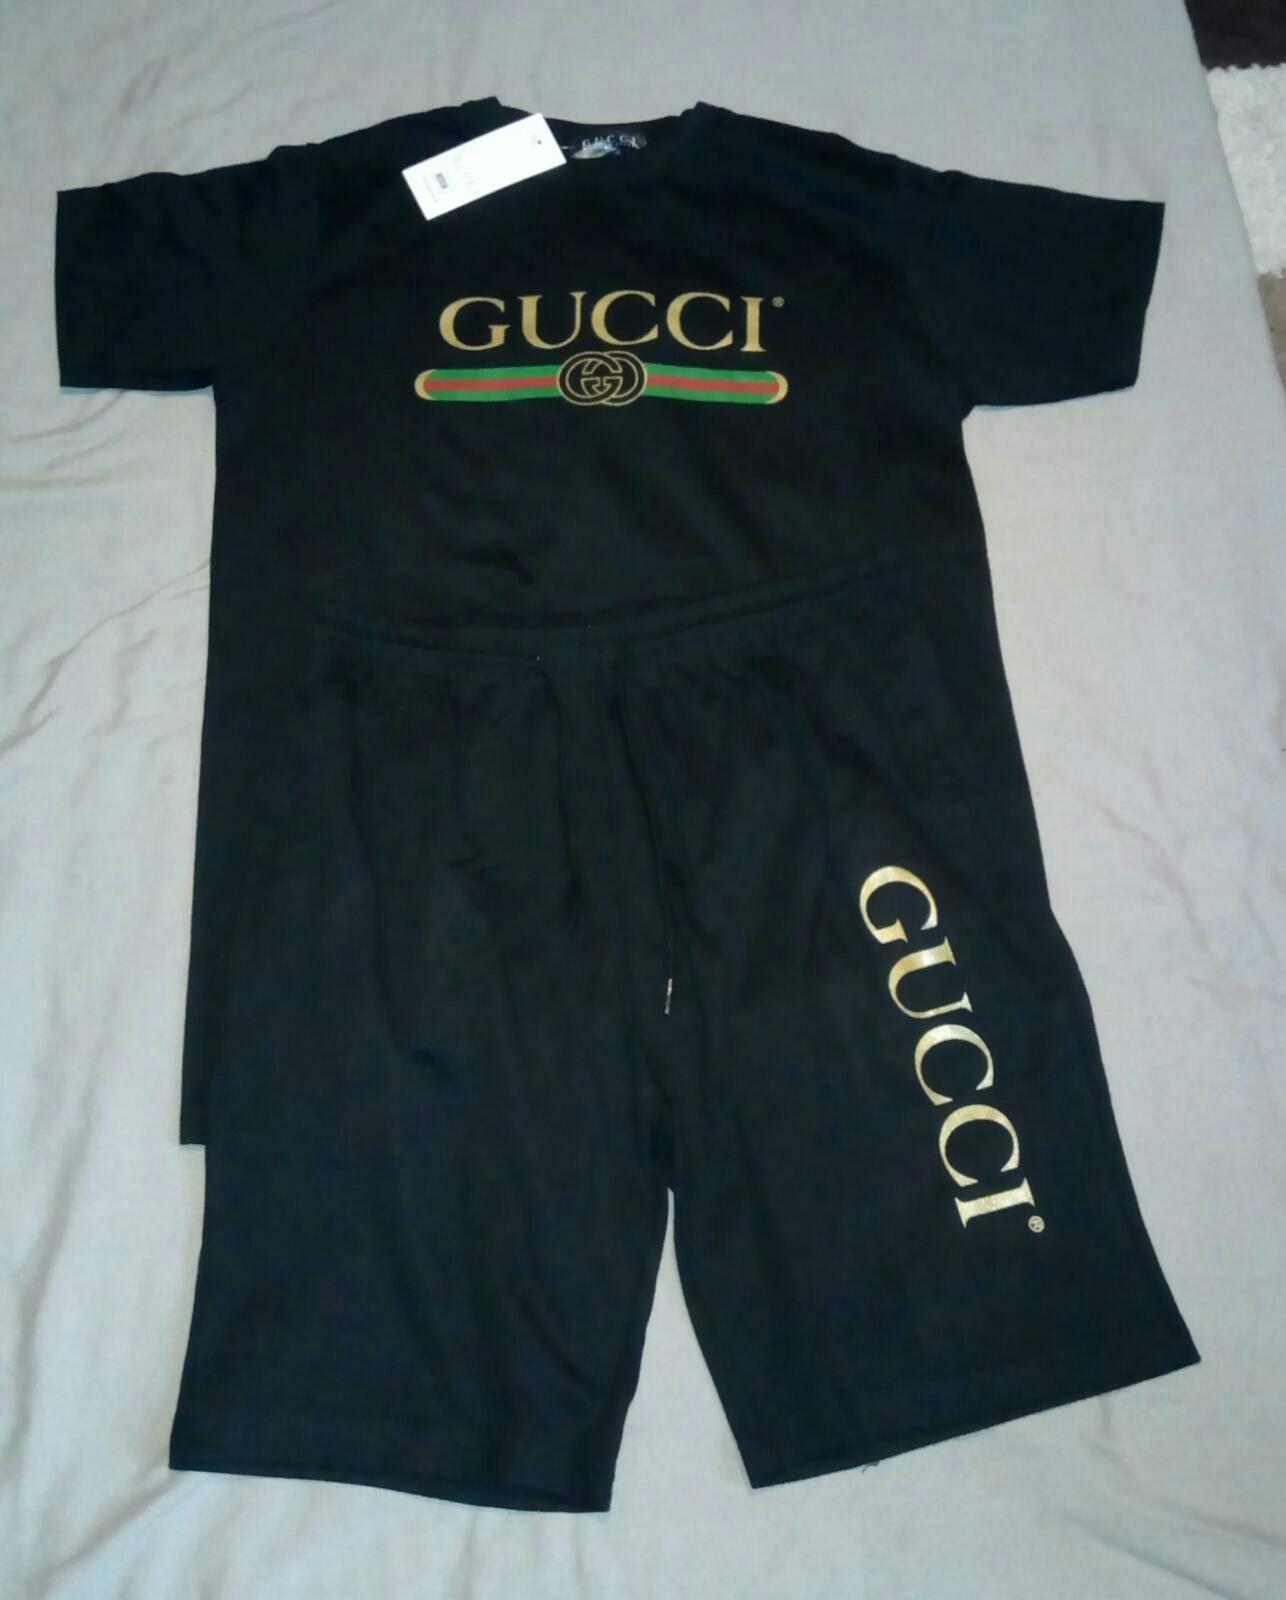 Gucci Clothes For Roblox Buyudum Cocuk Oldum - roblox high school shirt codes for gucci